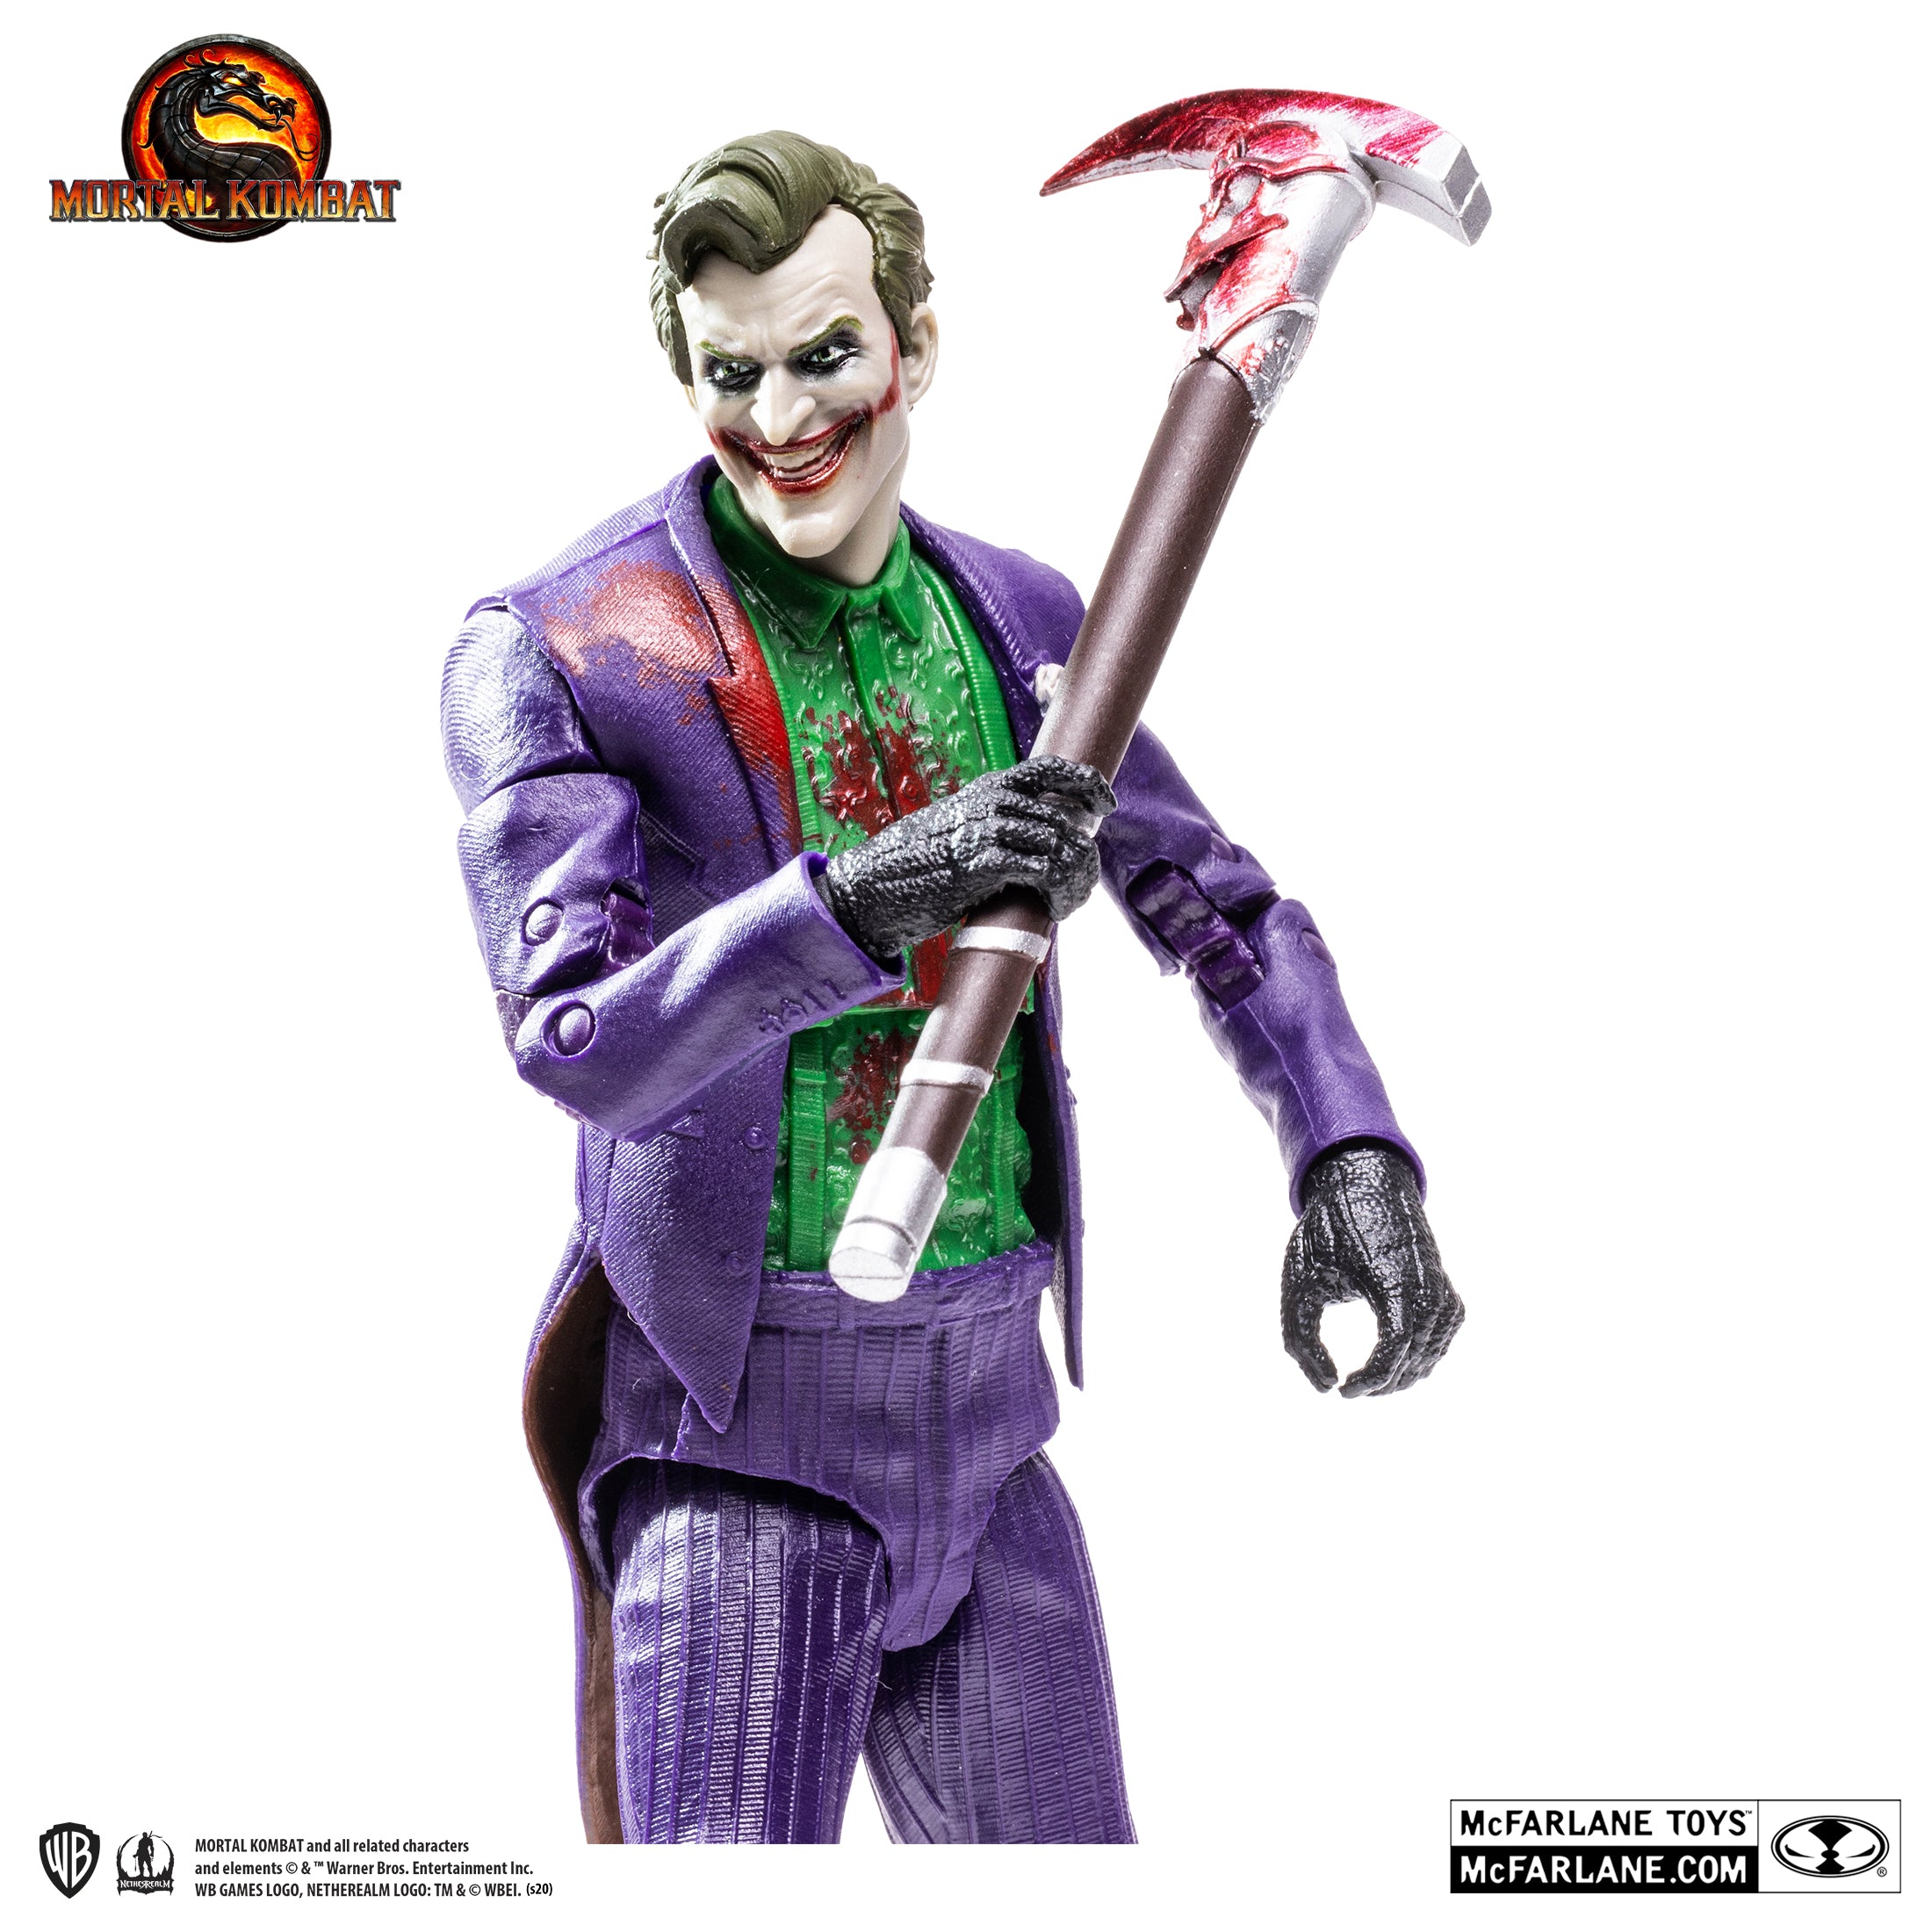 Mortal Kombat 11 - McFarlane Toys - The Joker (Blood Splatter)